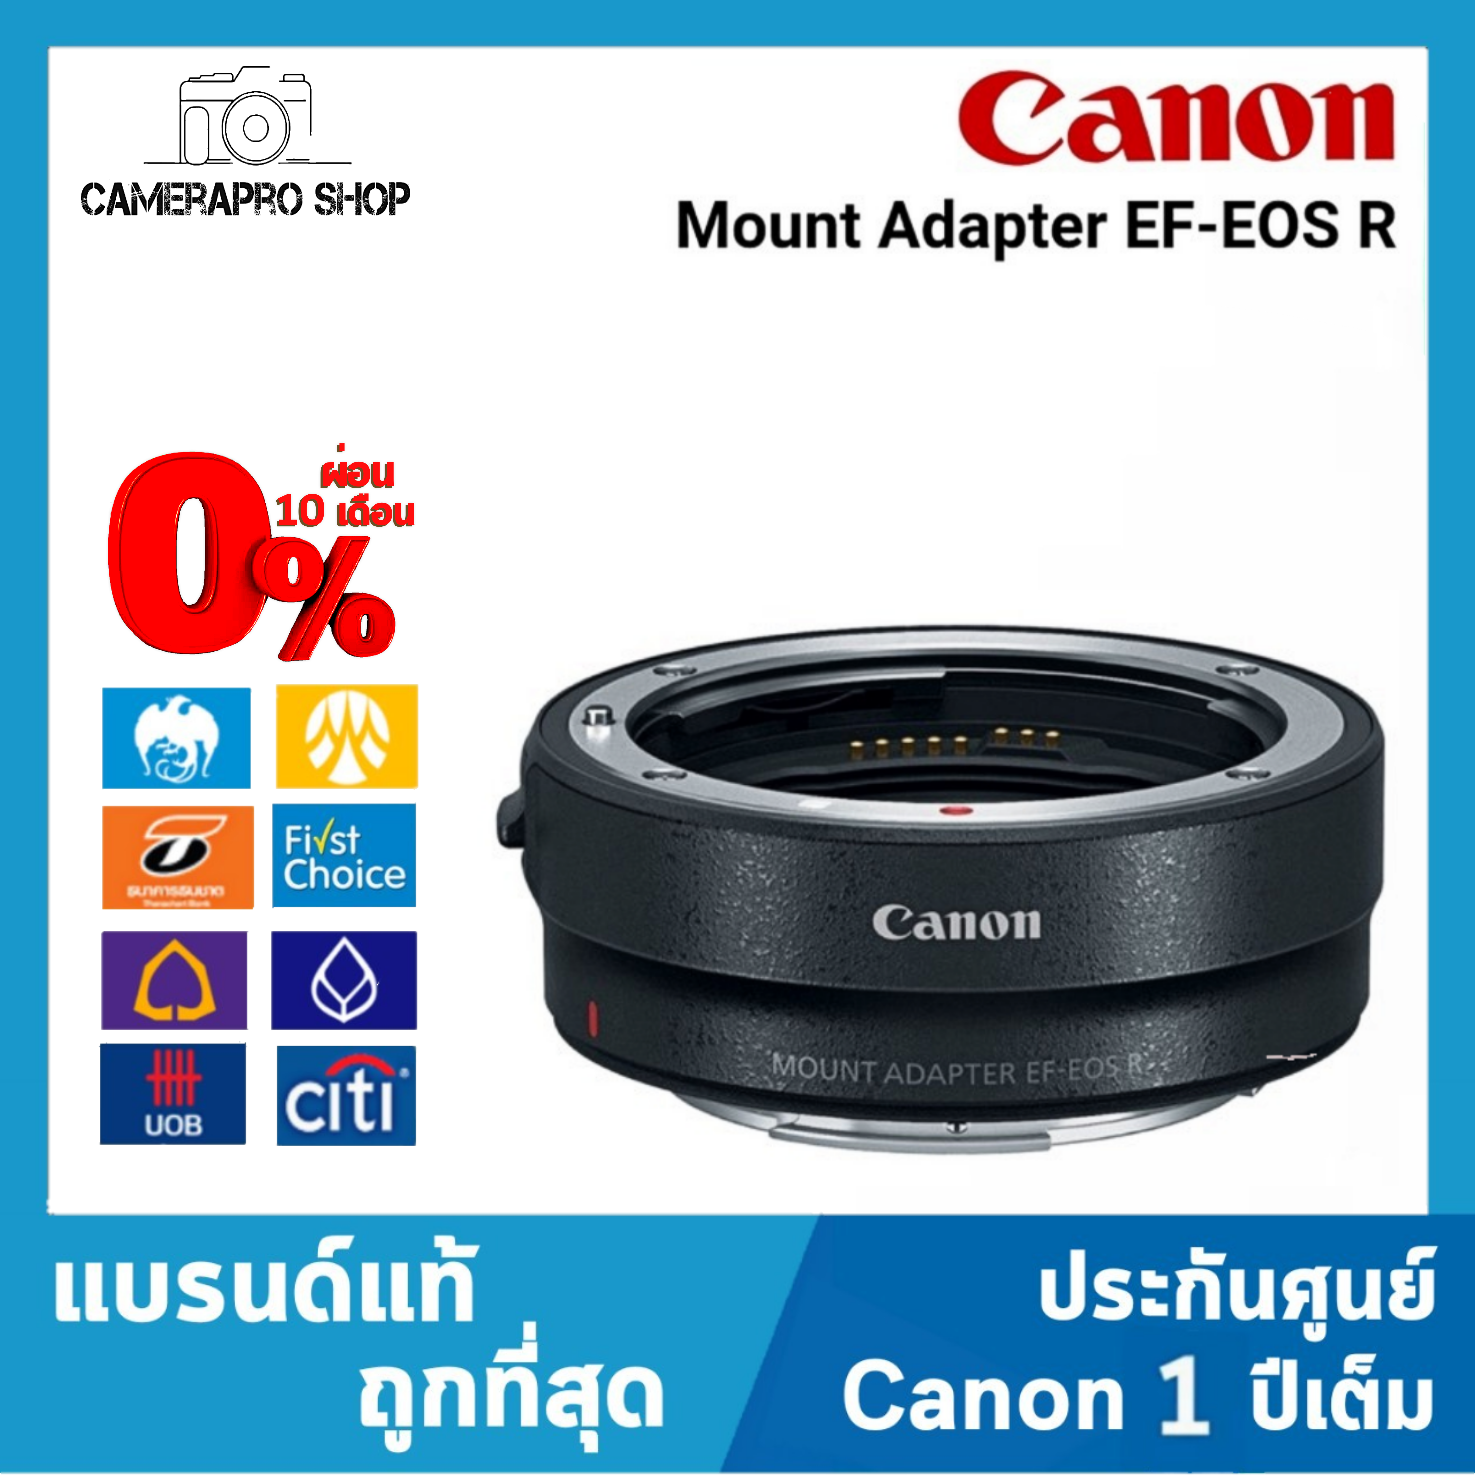 Canon Mount Adapter EF-EOS R (ประกันศูนย์ Canon Thailand 1 ปี)